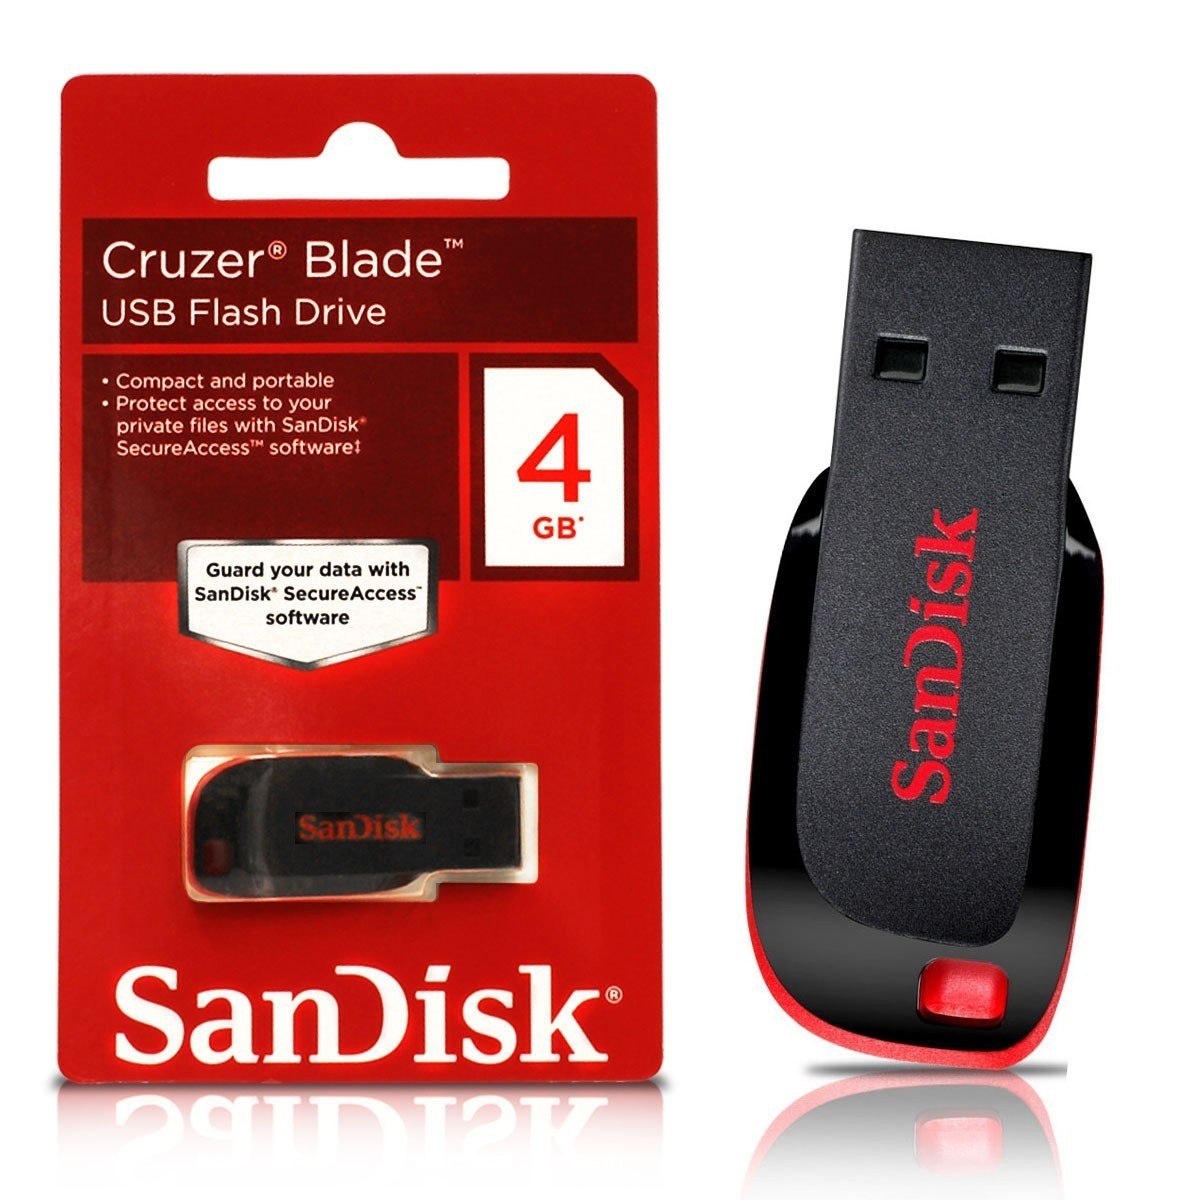 Beginner Rijpen criticus Sandisk Cruzer Blade USB 4GB Flash Drive - KSH 550